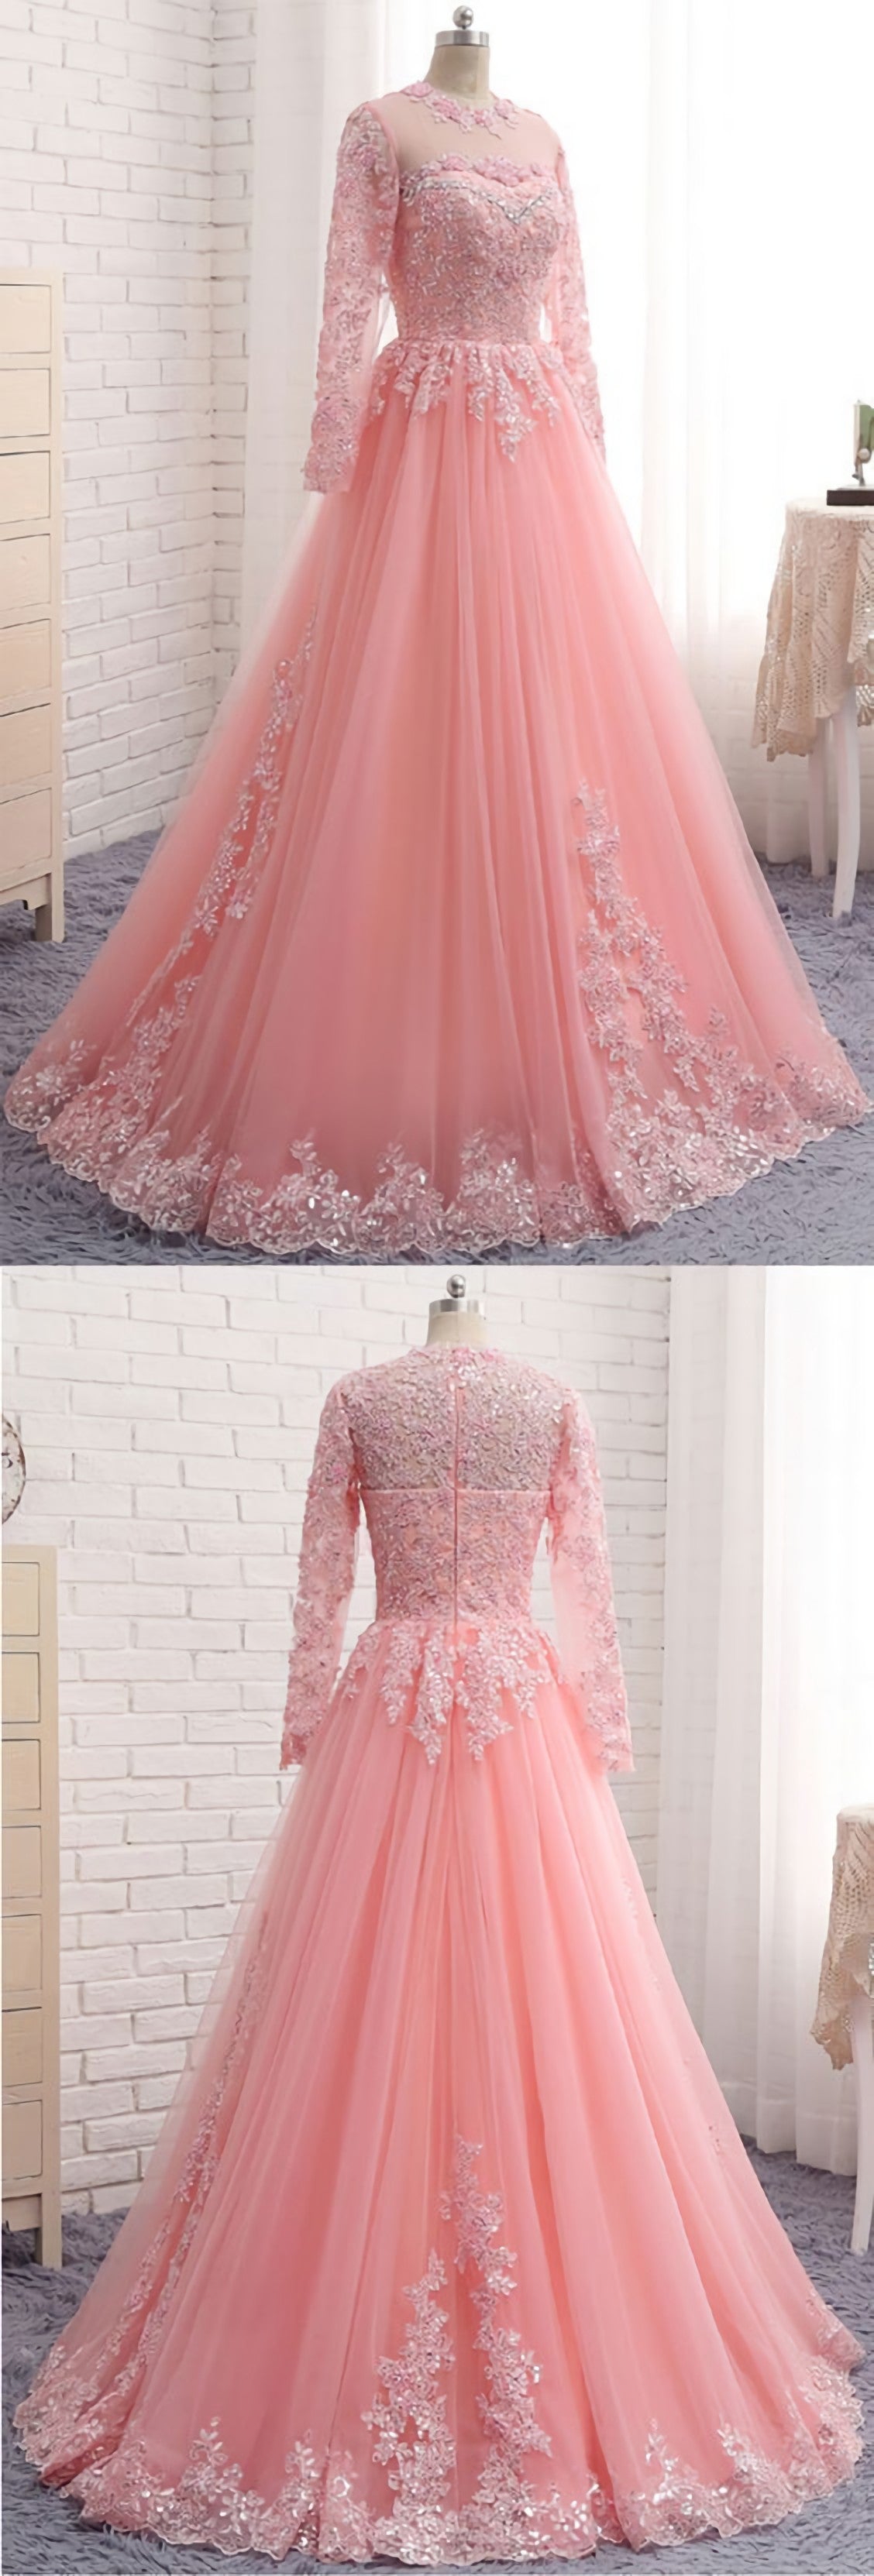 Prom Dress Black, Charming Long Sleeve Appliques Pink Tulle Prom Dresses, Elegant Evening Formal Dress